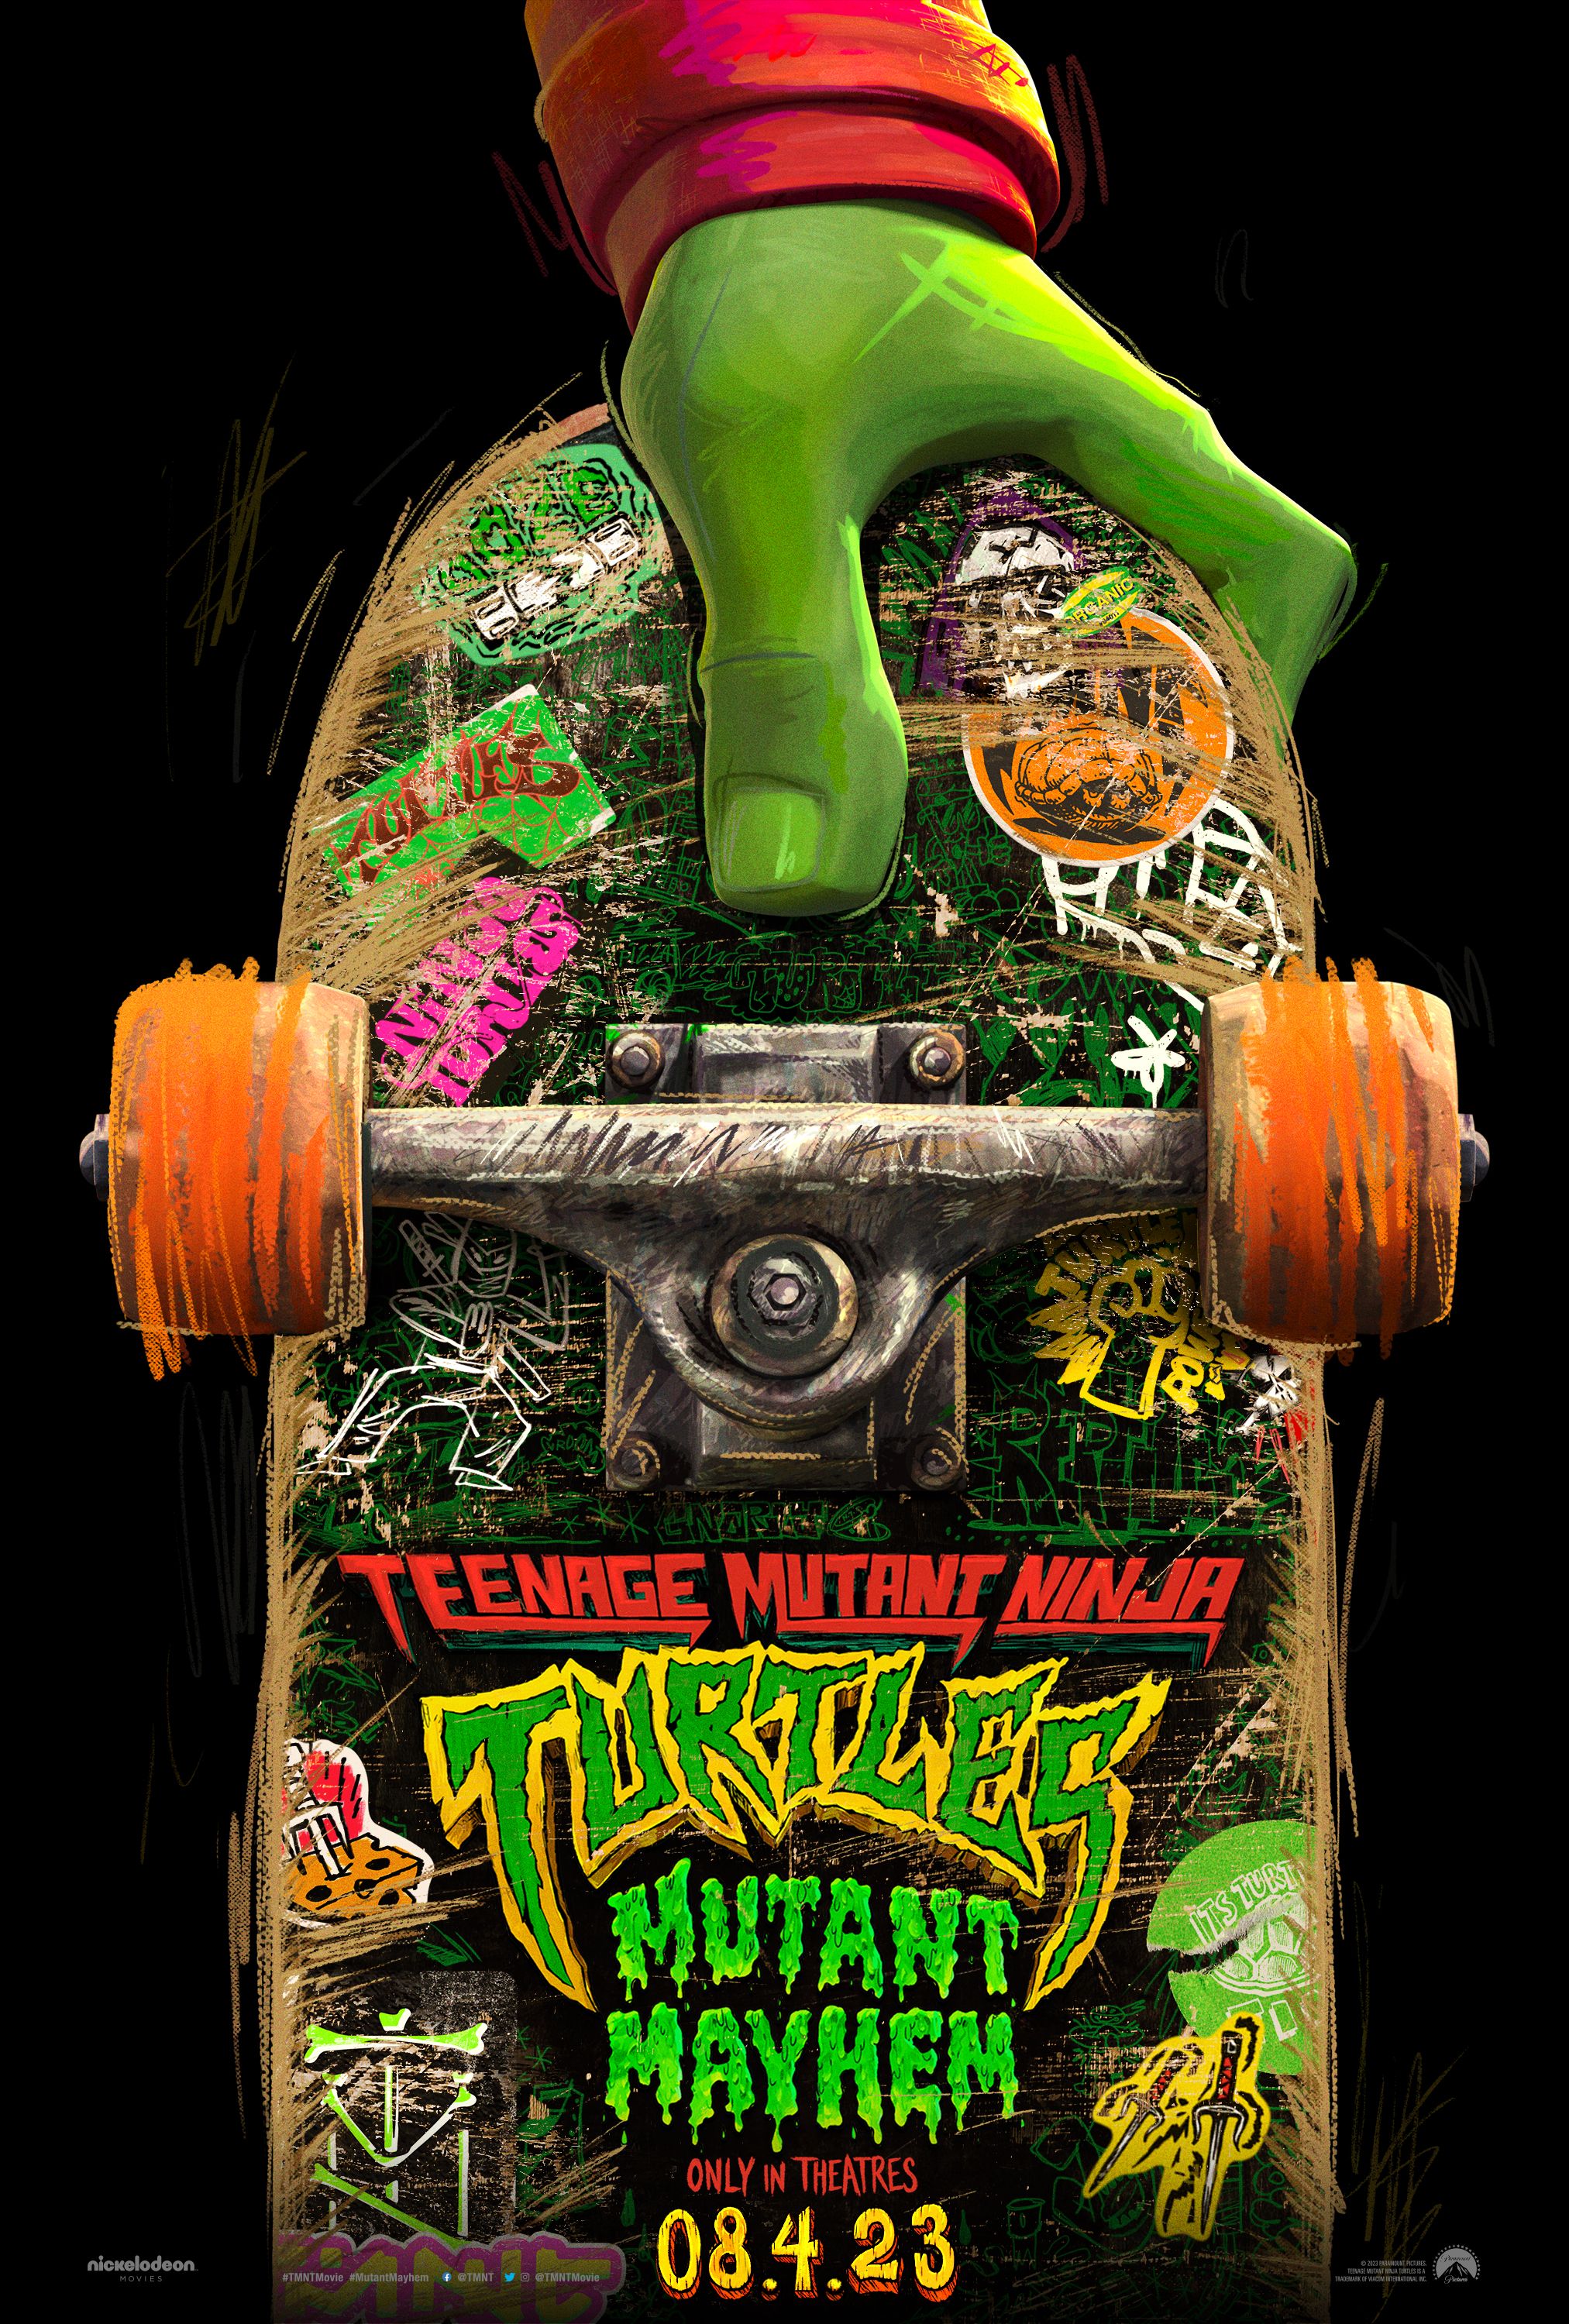 https://static0.cbrimages.com/wordpress/wp-content/uploads/2023/03/teenage-mutant-ninja-turtles-mutant-mayhem-poster.jpg